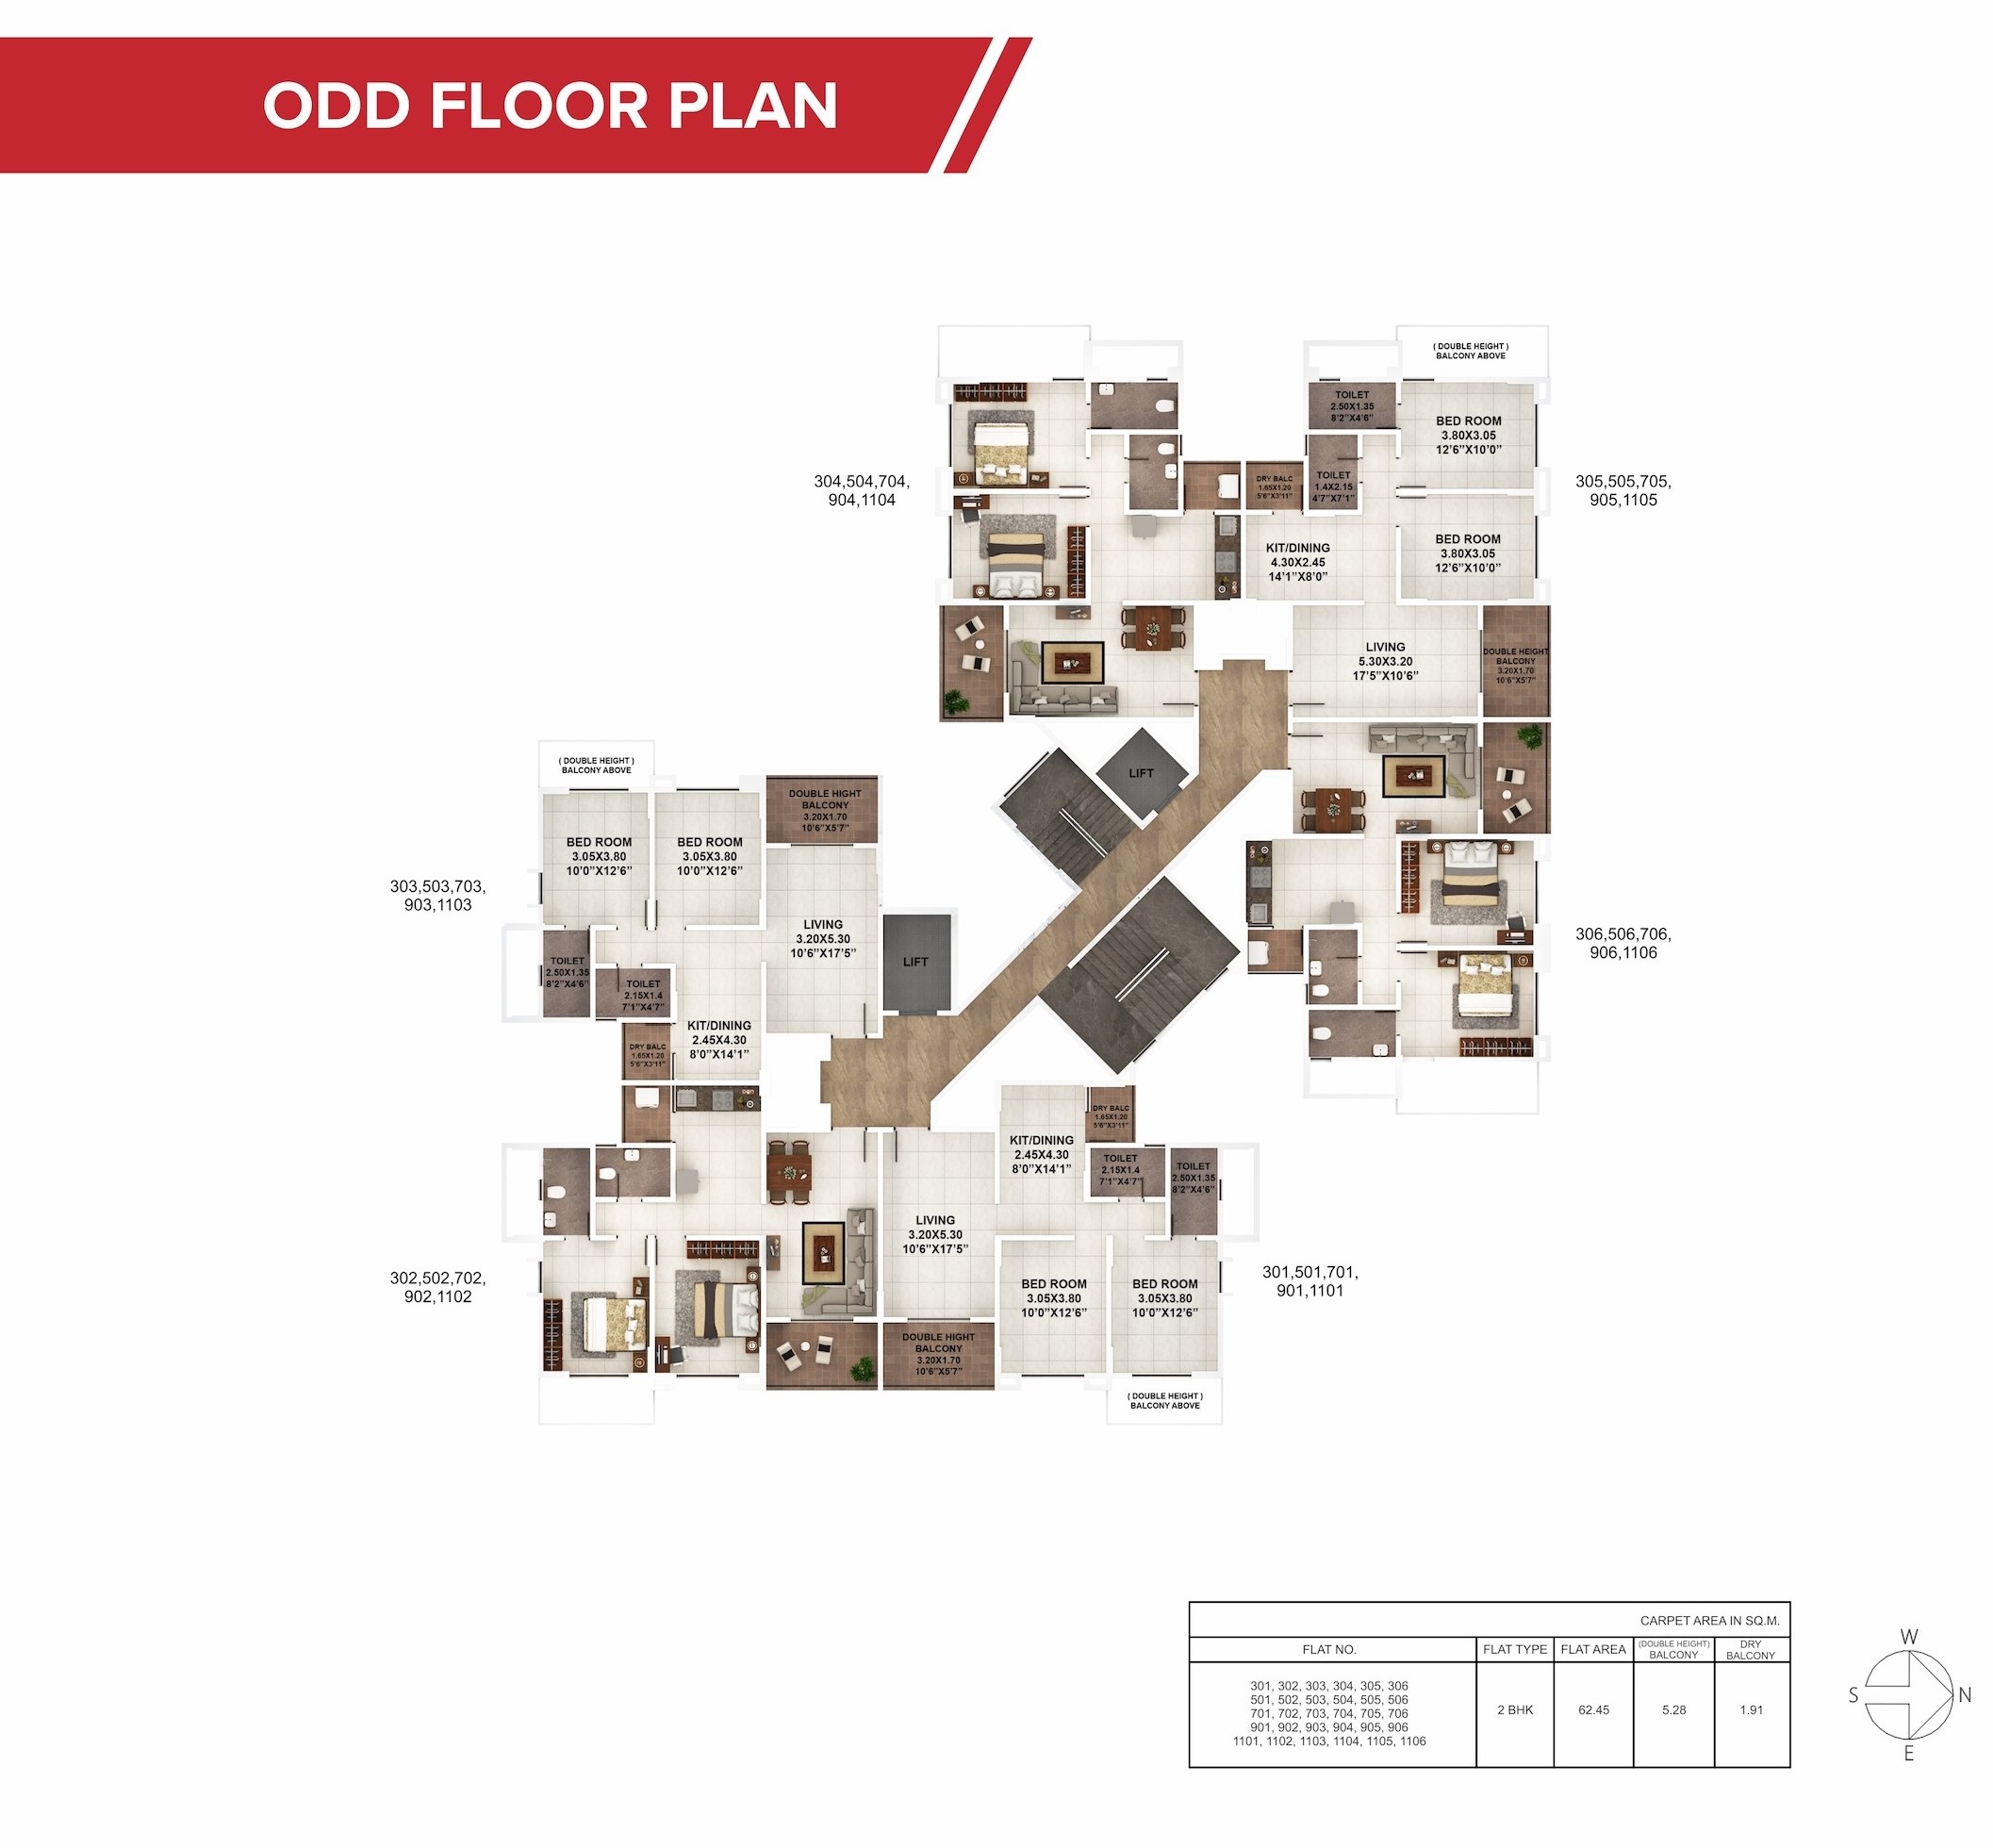 Palmgrove Odd Floor Plan